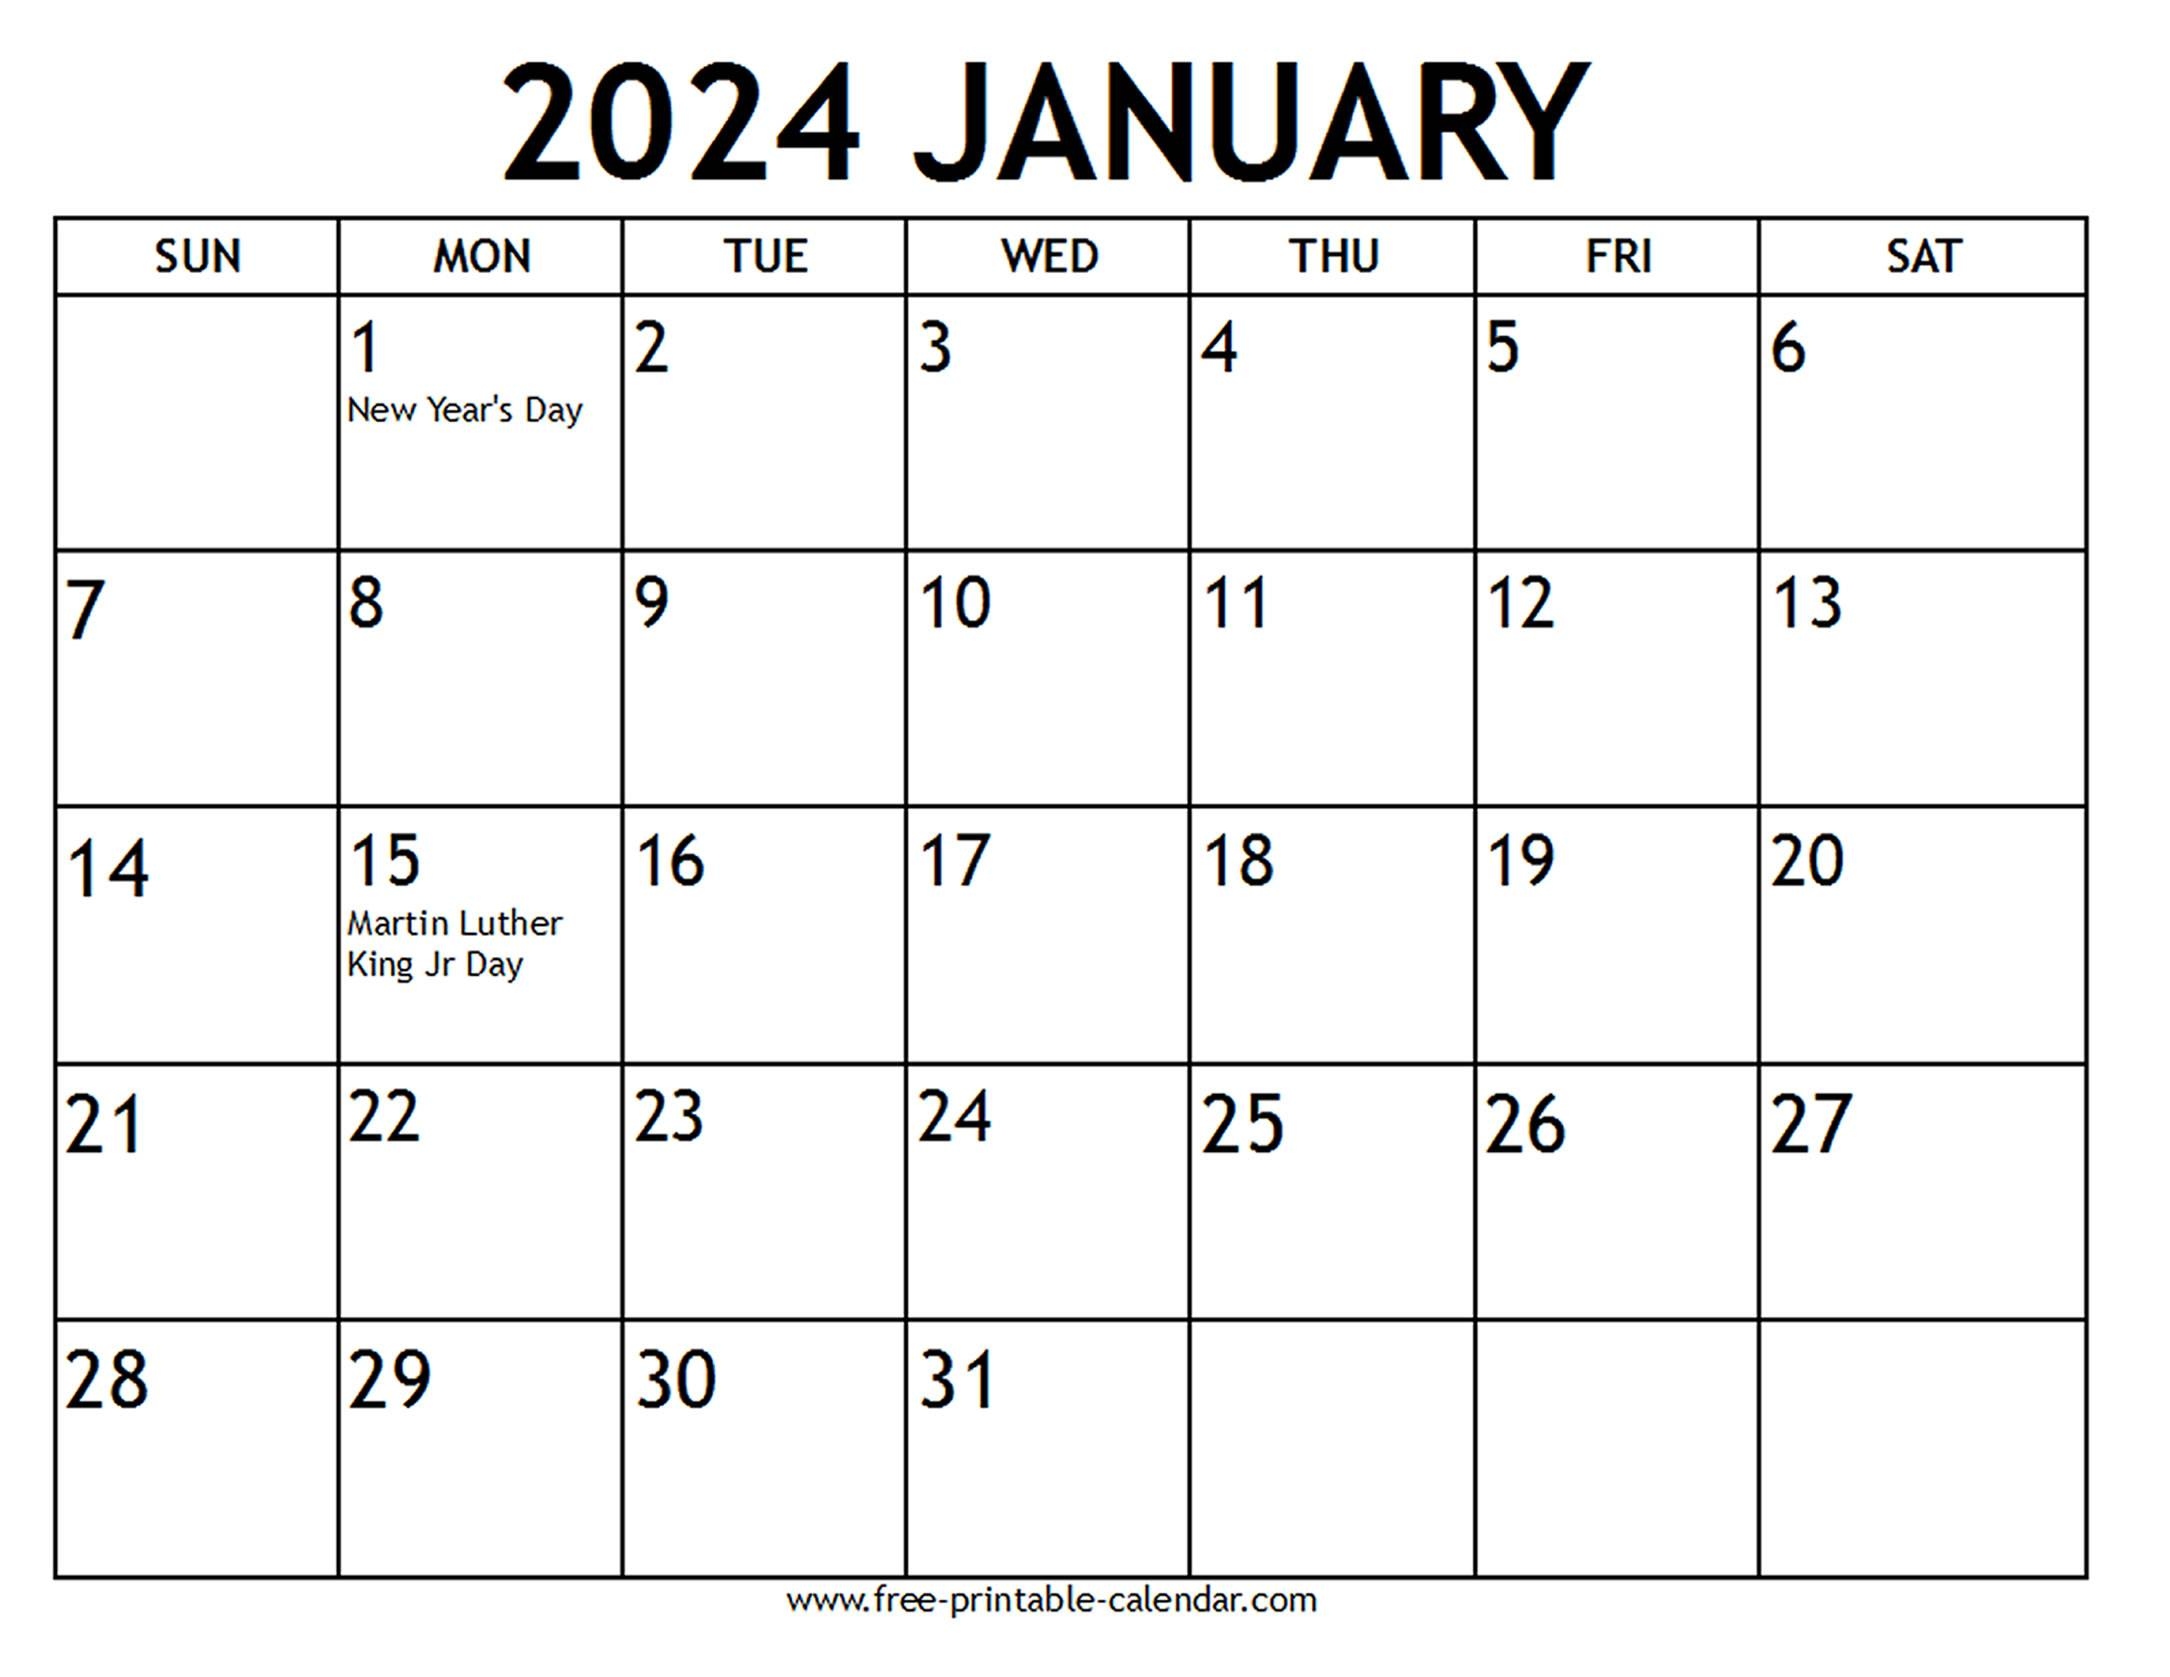 January 2024 Calendar Us Holidays - Free-Printable-Calendar inside Free Printable Calendar 2024 With Holidays Pdf